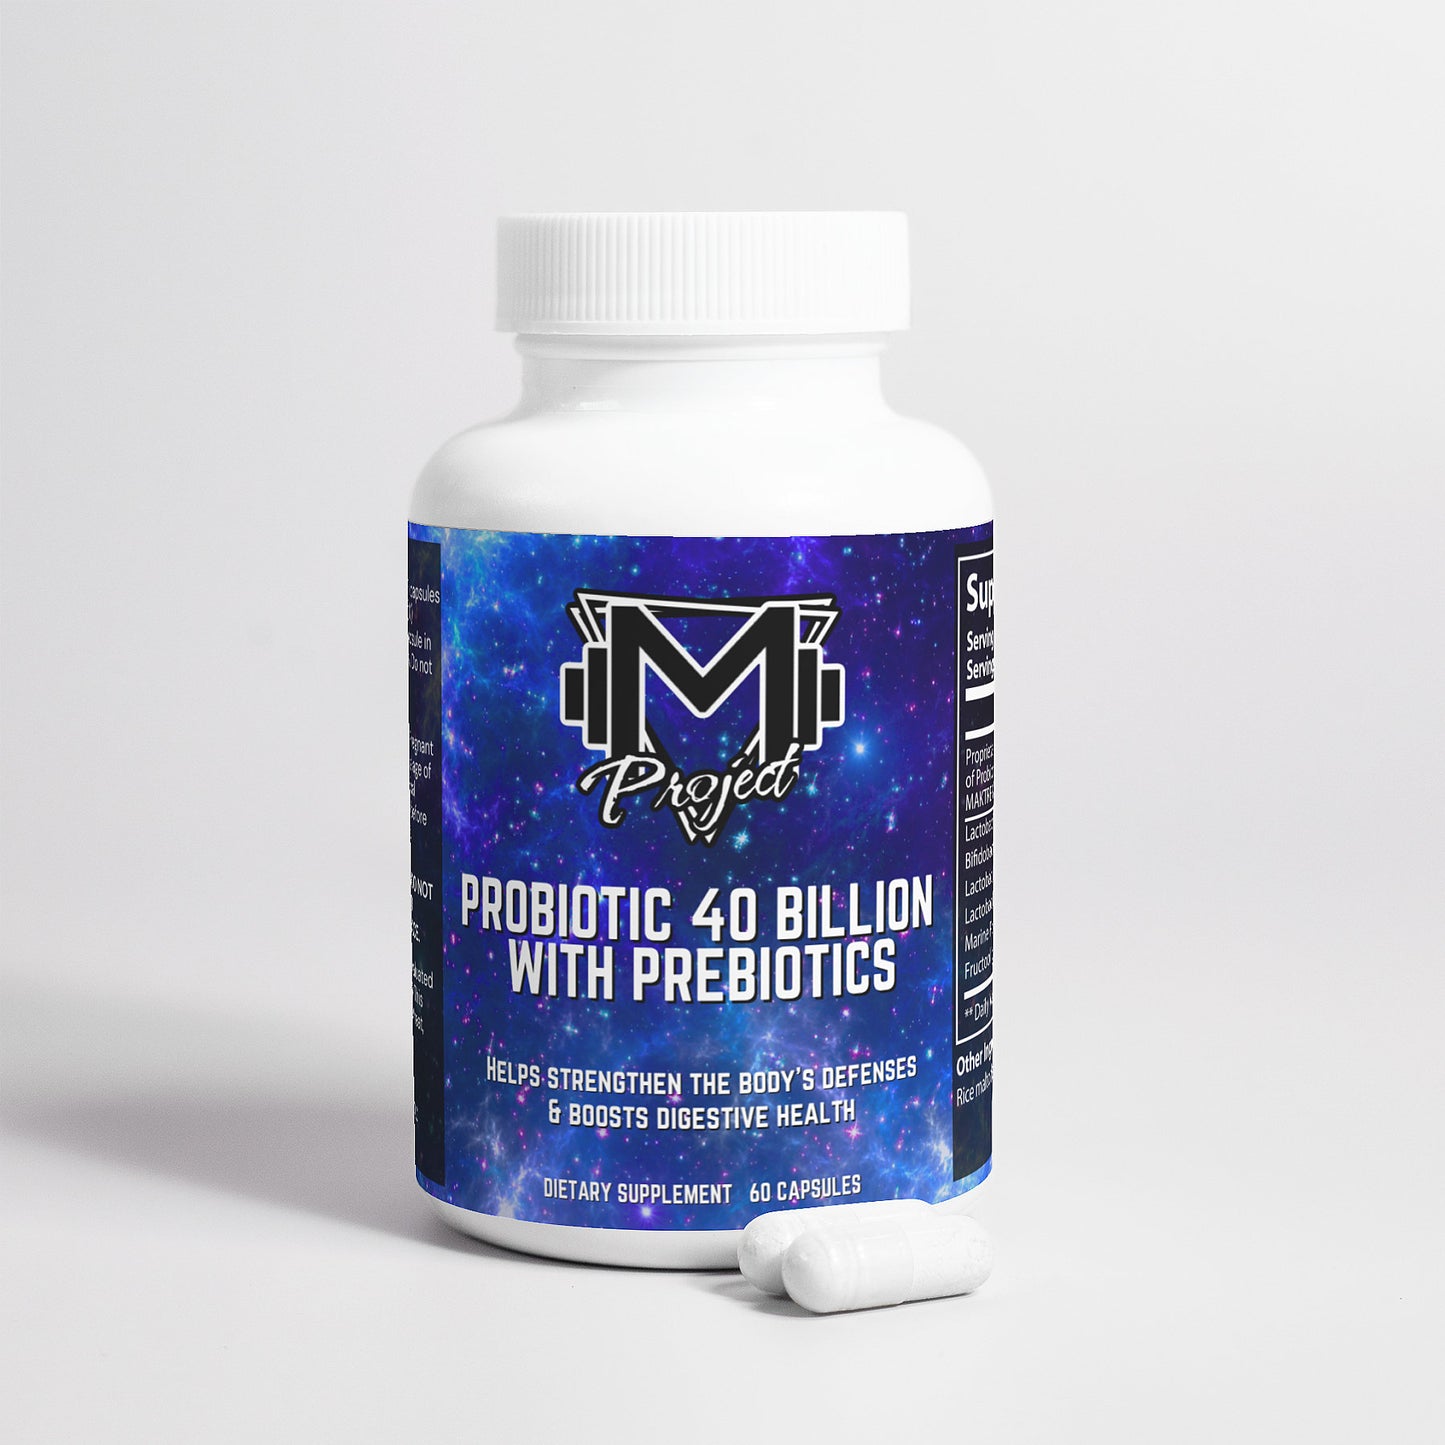 Probiotic 40 Billion w/ Prebiotics by Project M